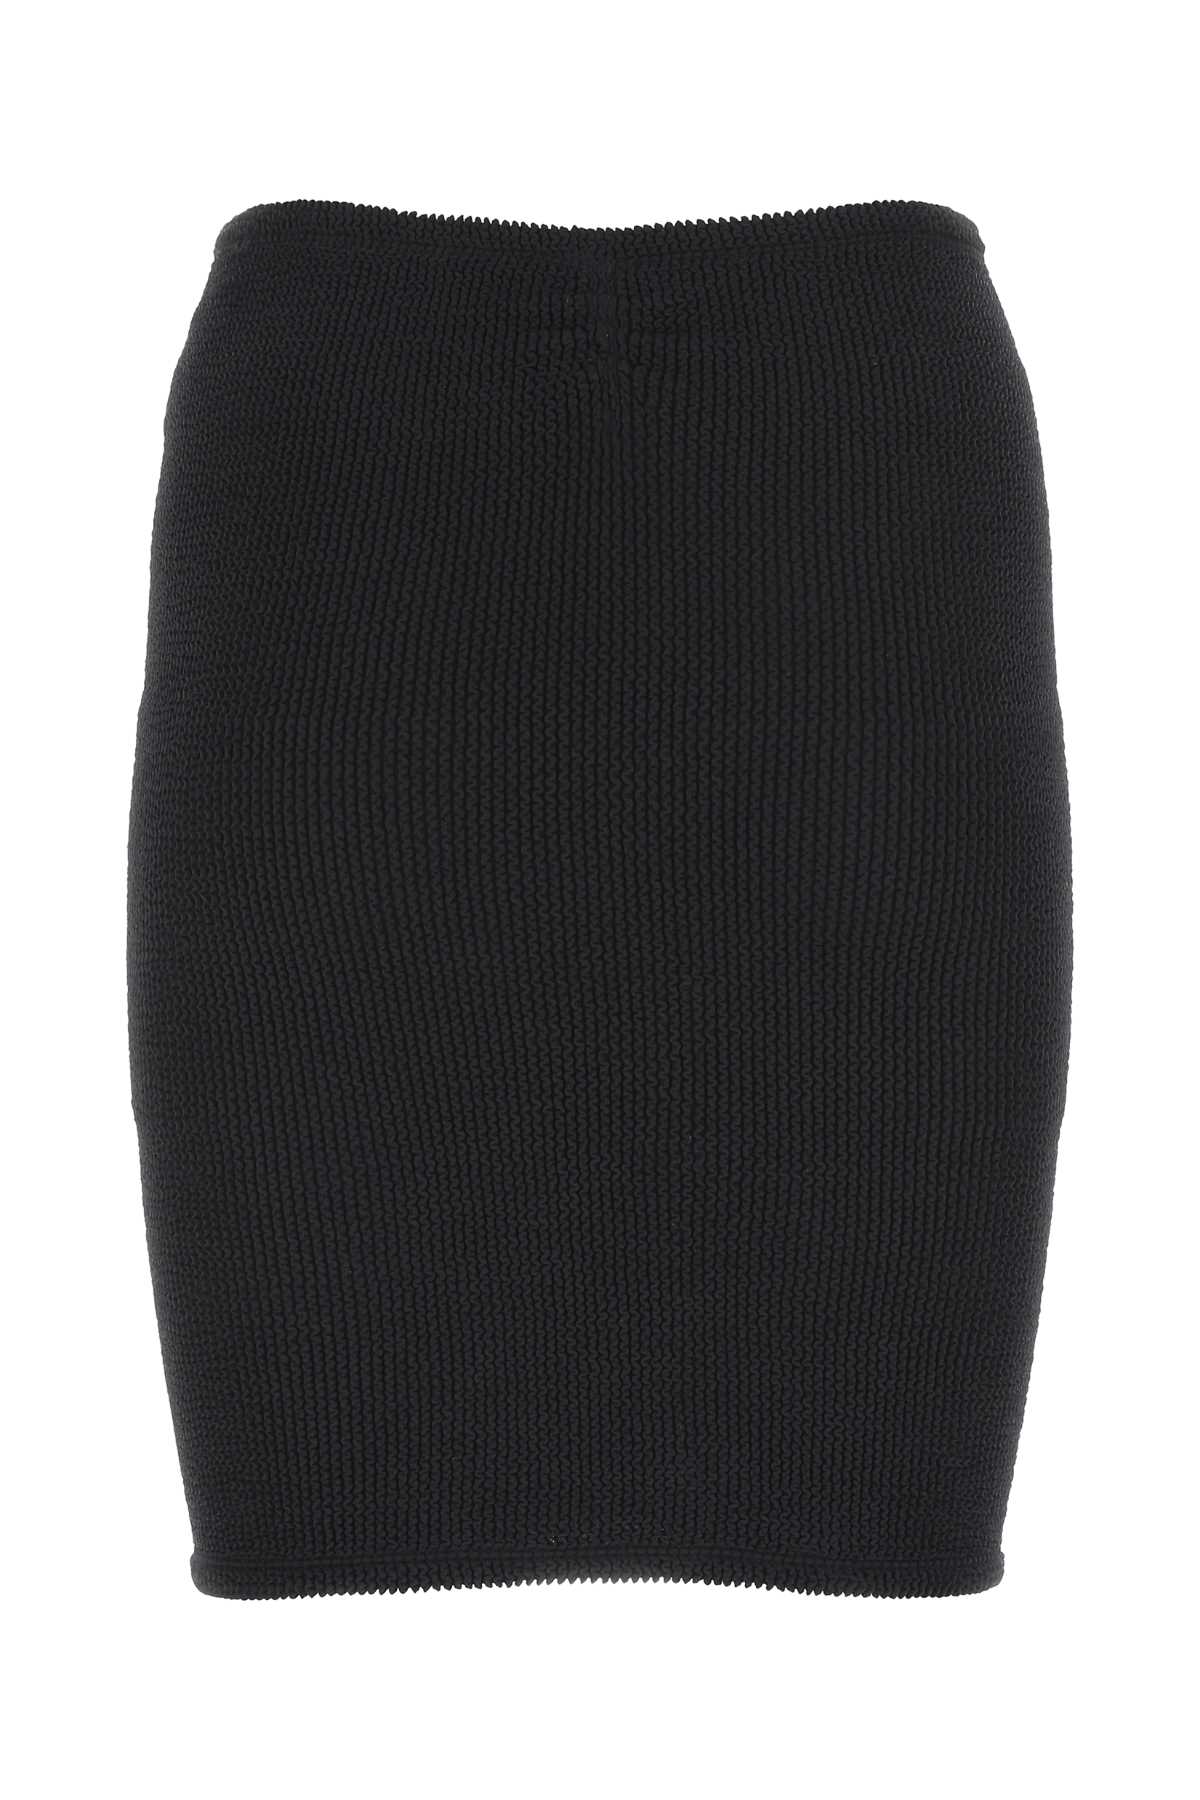 Shop Hunza G Black Stretch Nylon Mini Skirt